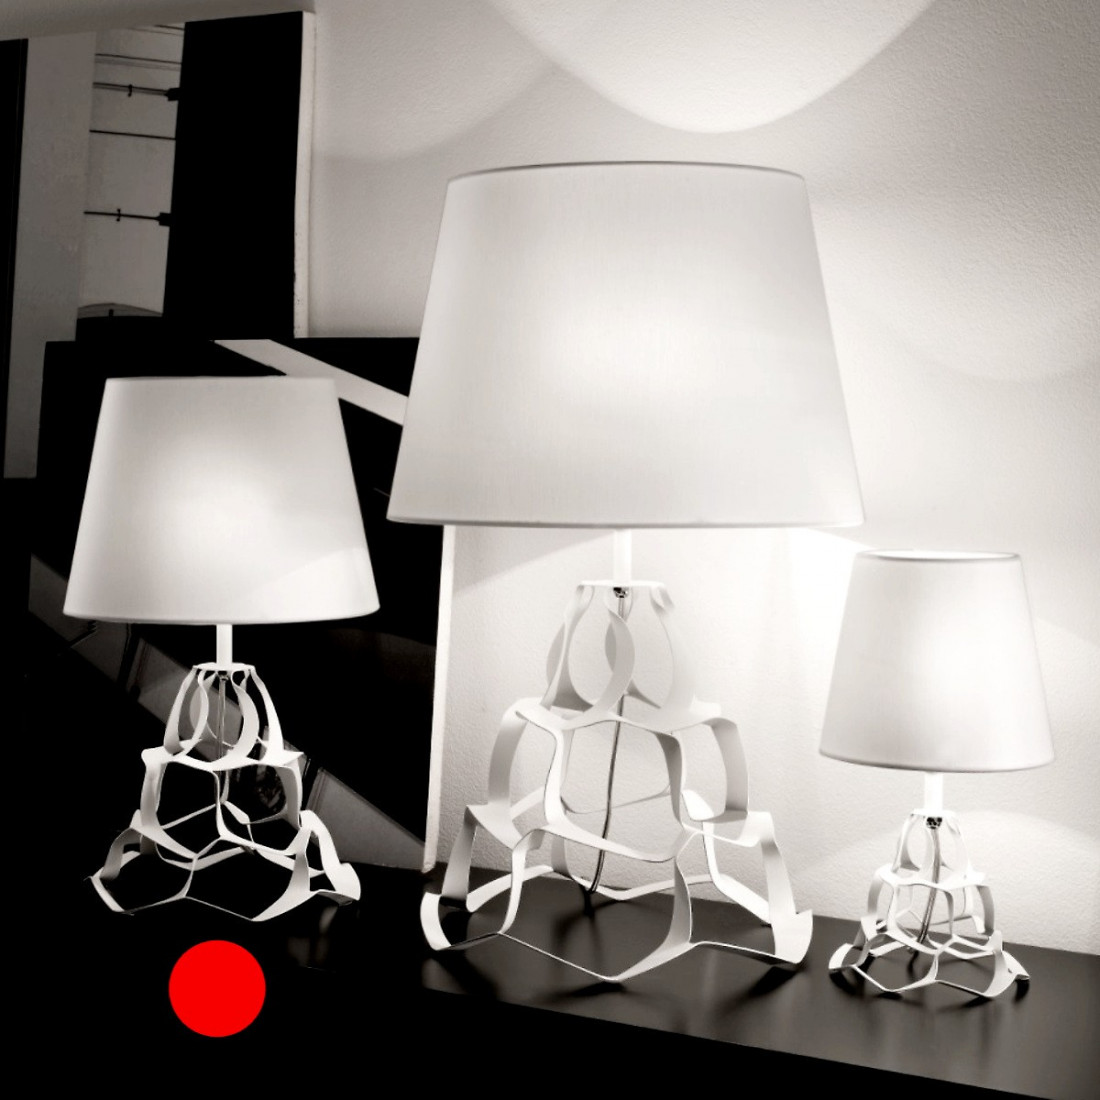 Abat-jour SN-ANAIS 1046 H41 E27 LED media metallo bianco bronzo paralume tessuto lampada tavolo comodino moderna interno